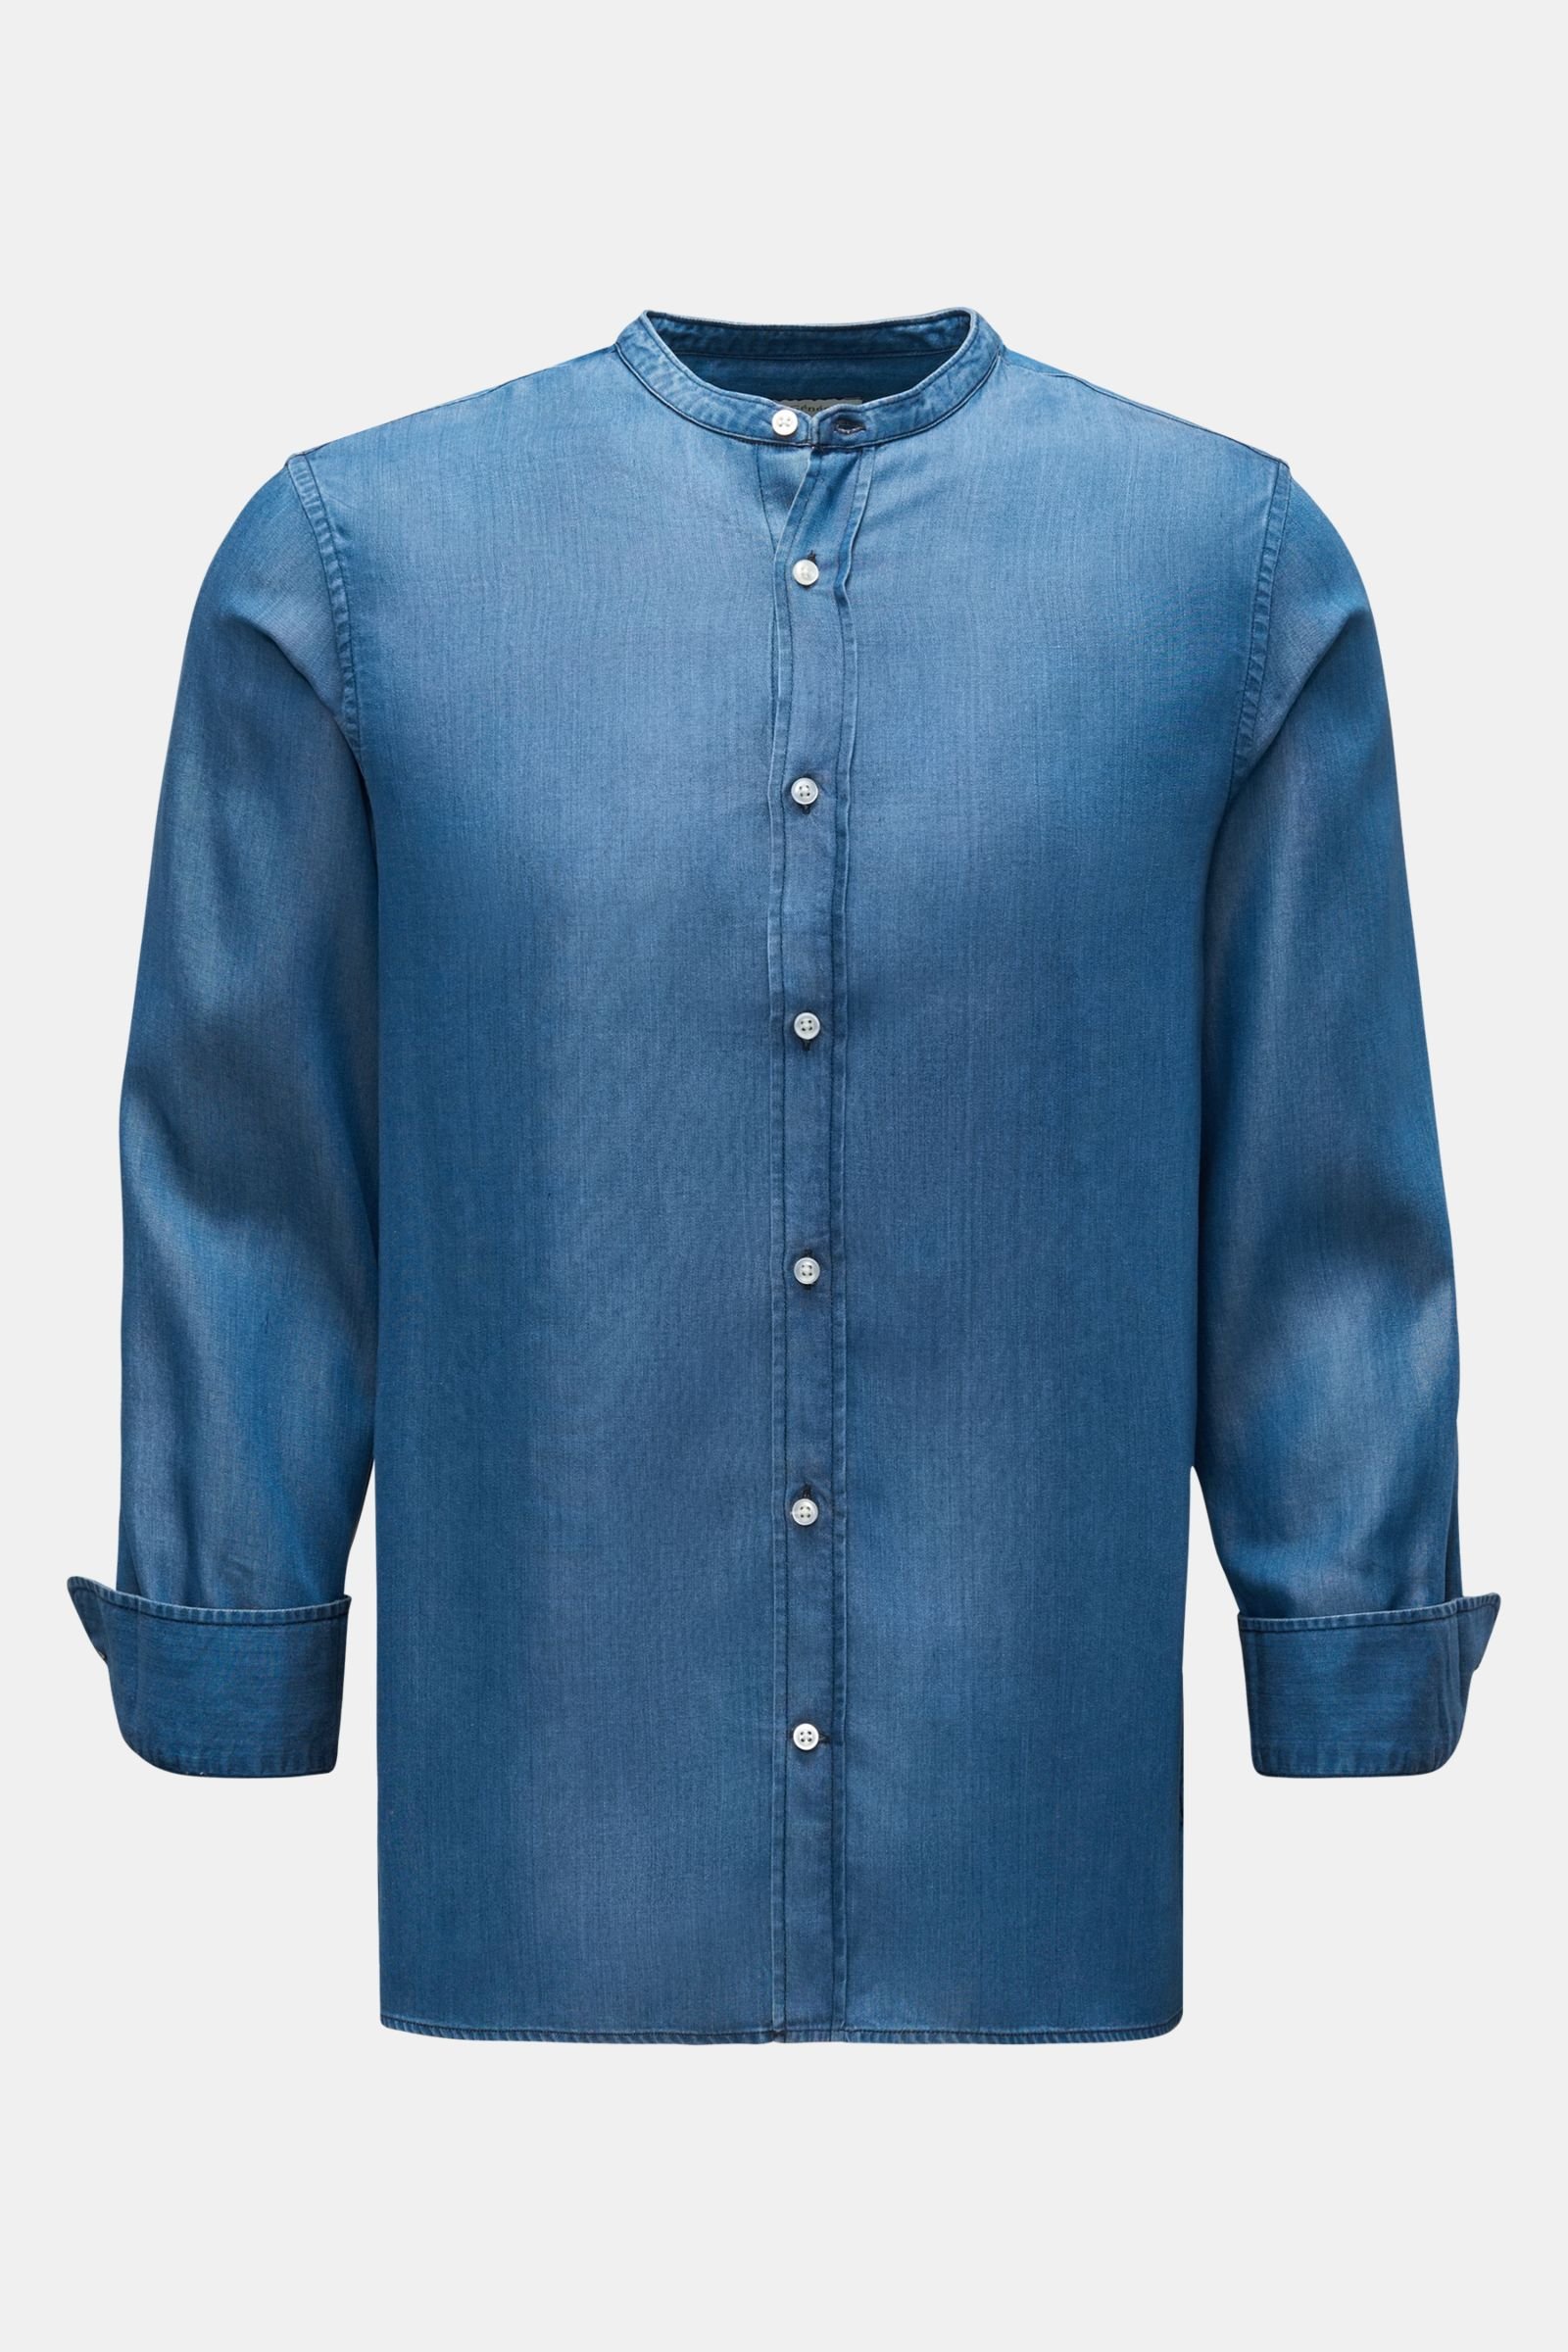 Chambray shirt 'Gaston' Grandad collar grey-blue